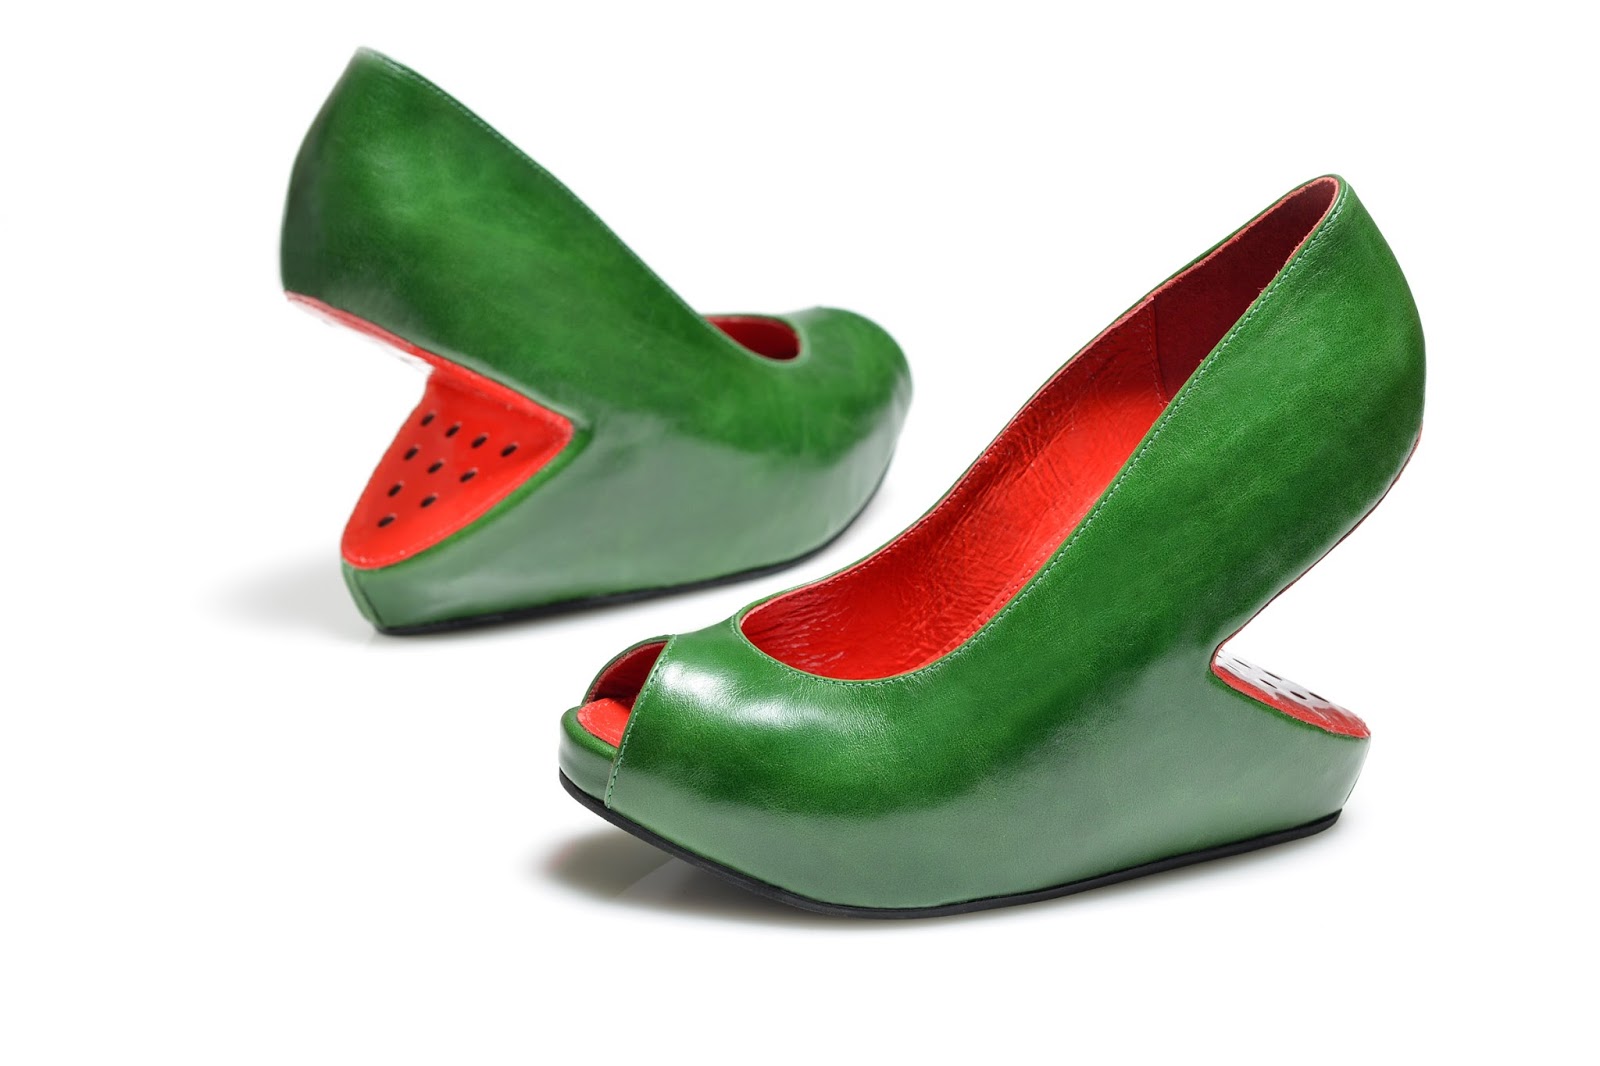 Kobi Levi- Footwear Design: Watermelon 2015